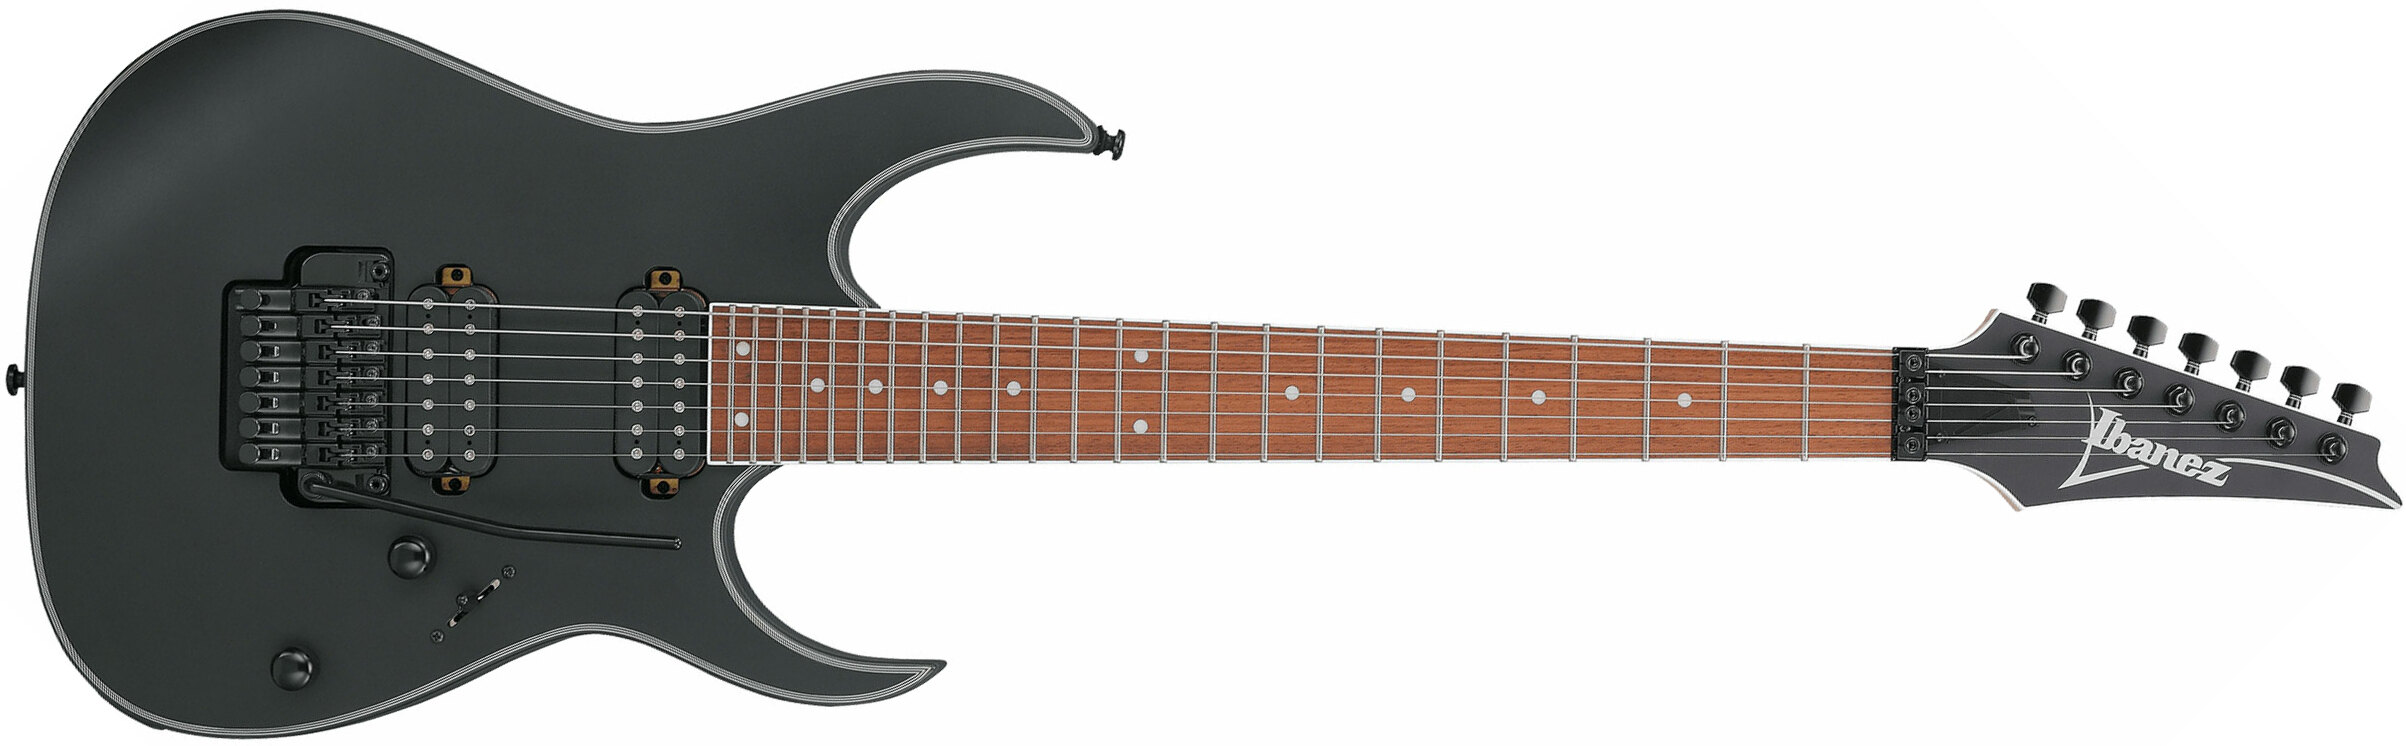 Ibanez Rg7420ex Bkf Standard 7c 2h Ht Jat - Black Flat - 7-saitige E-Gitarre - Main picture